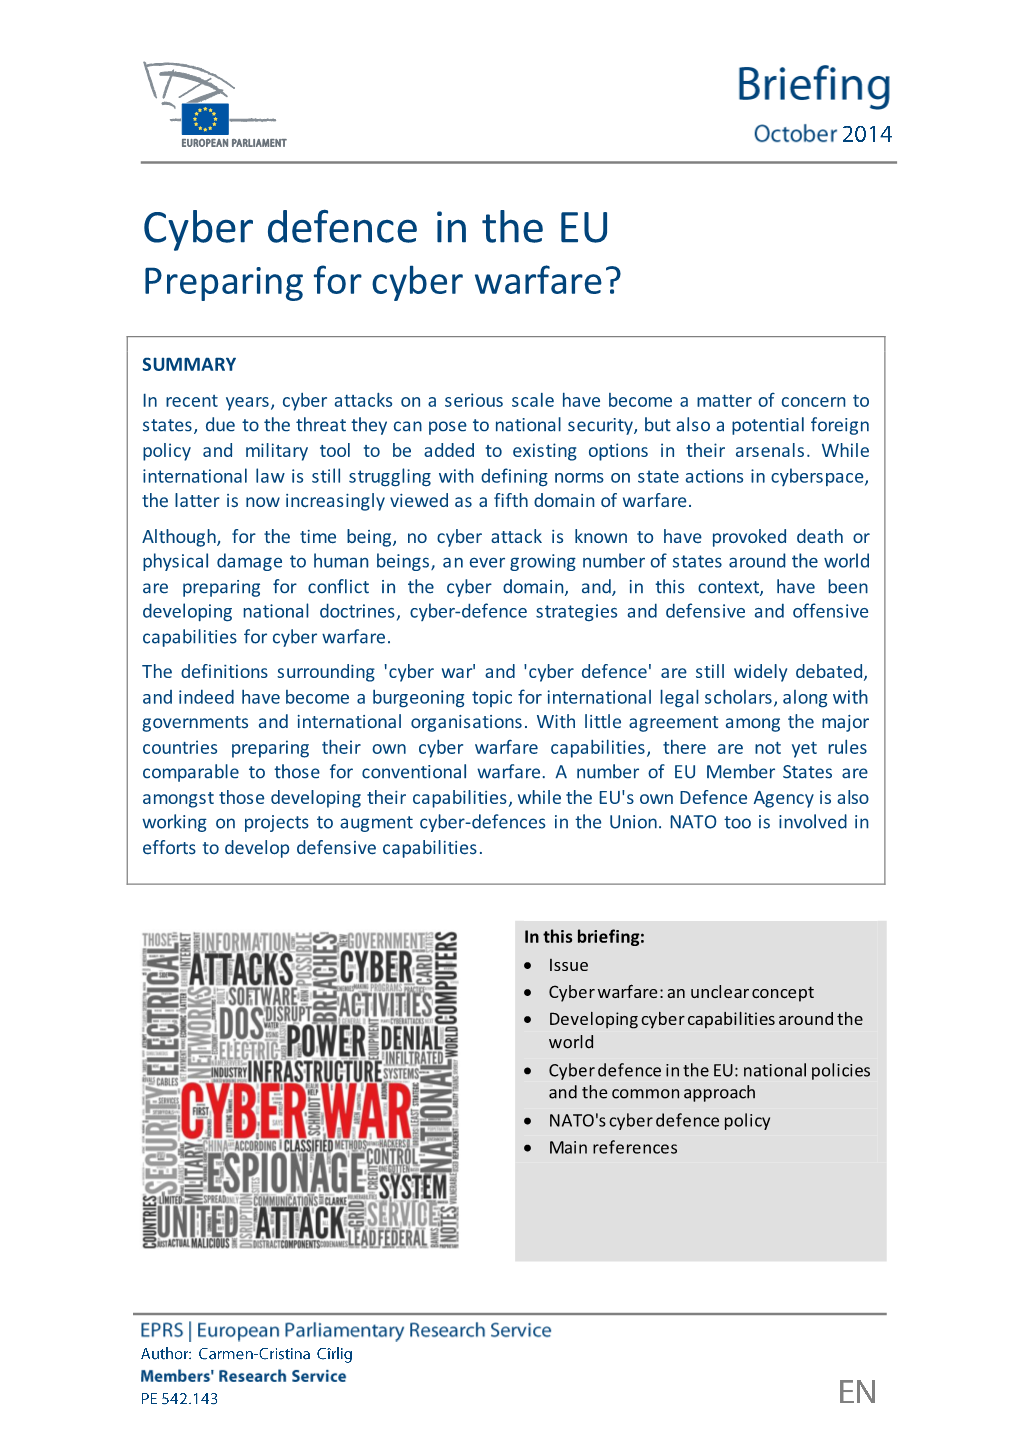 Cyber Defence in the EU Preparing for Cyber Warfare?